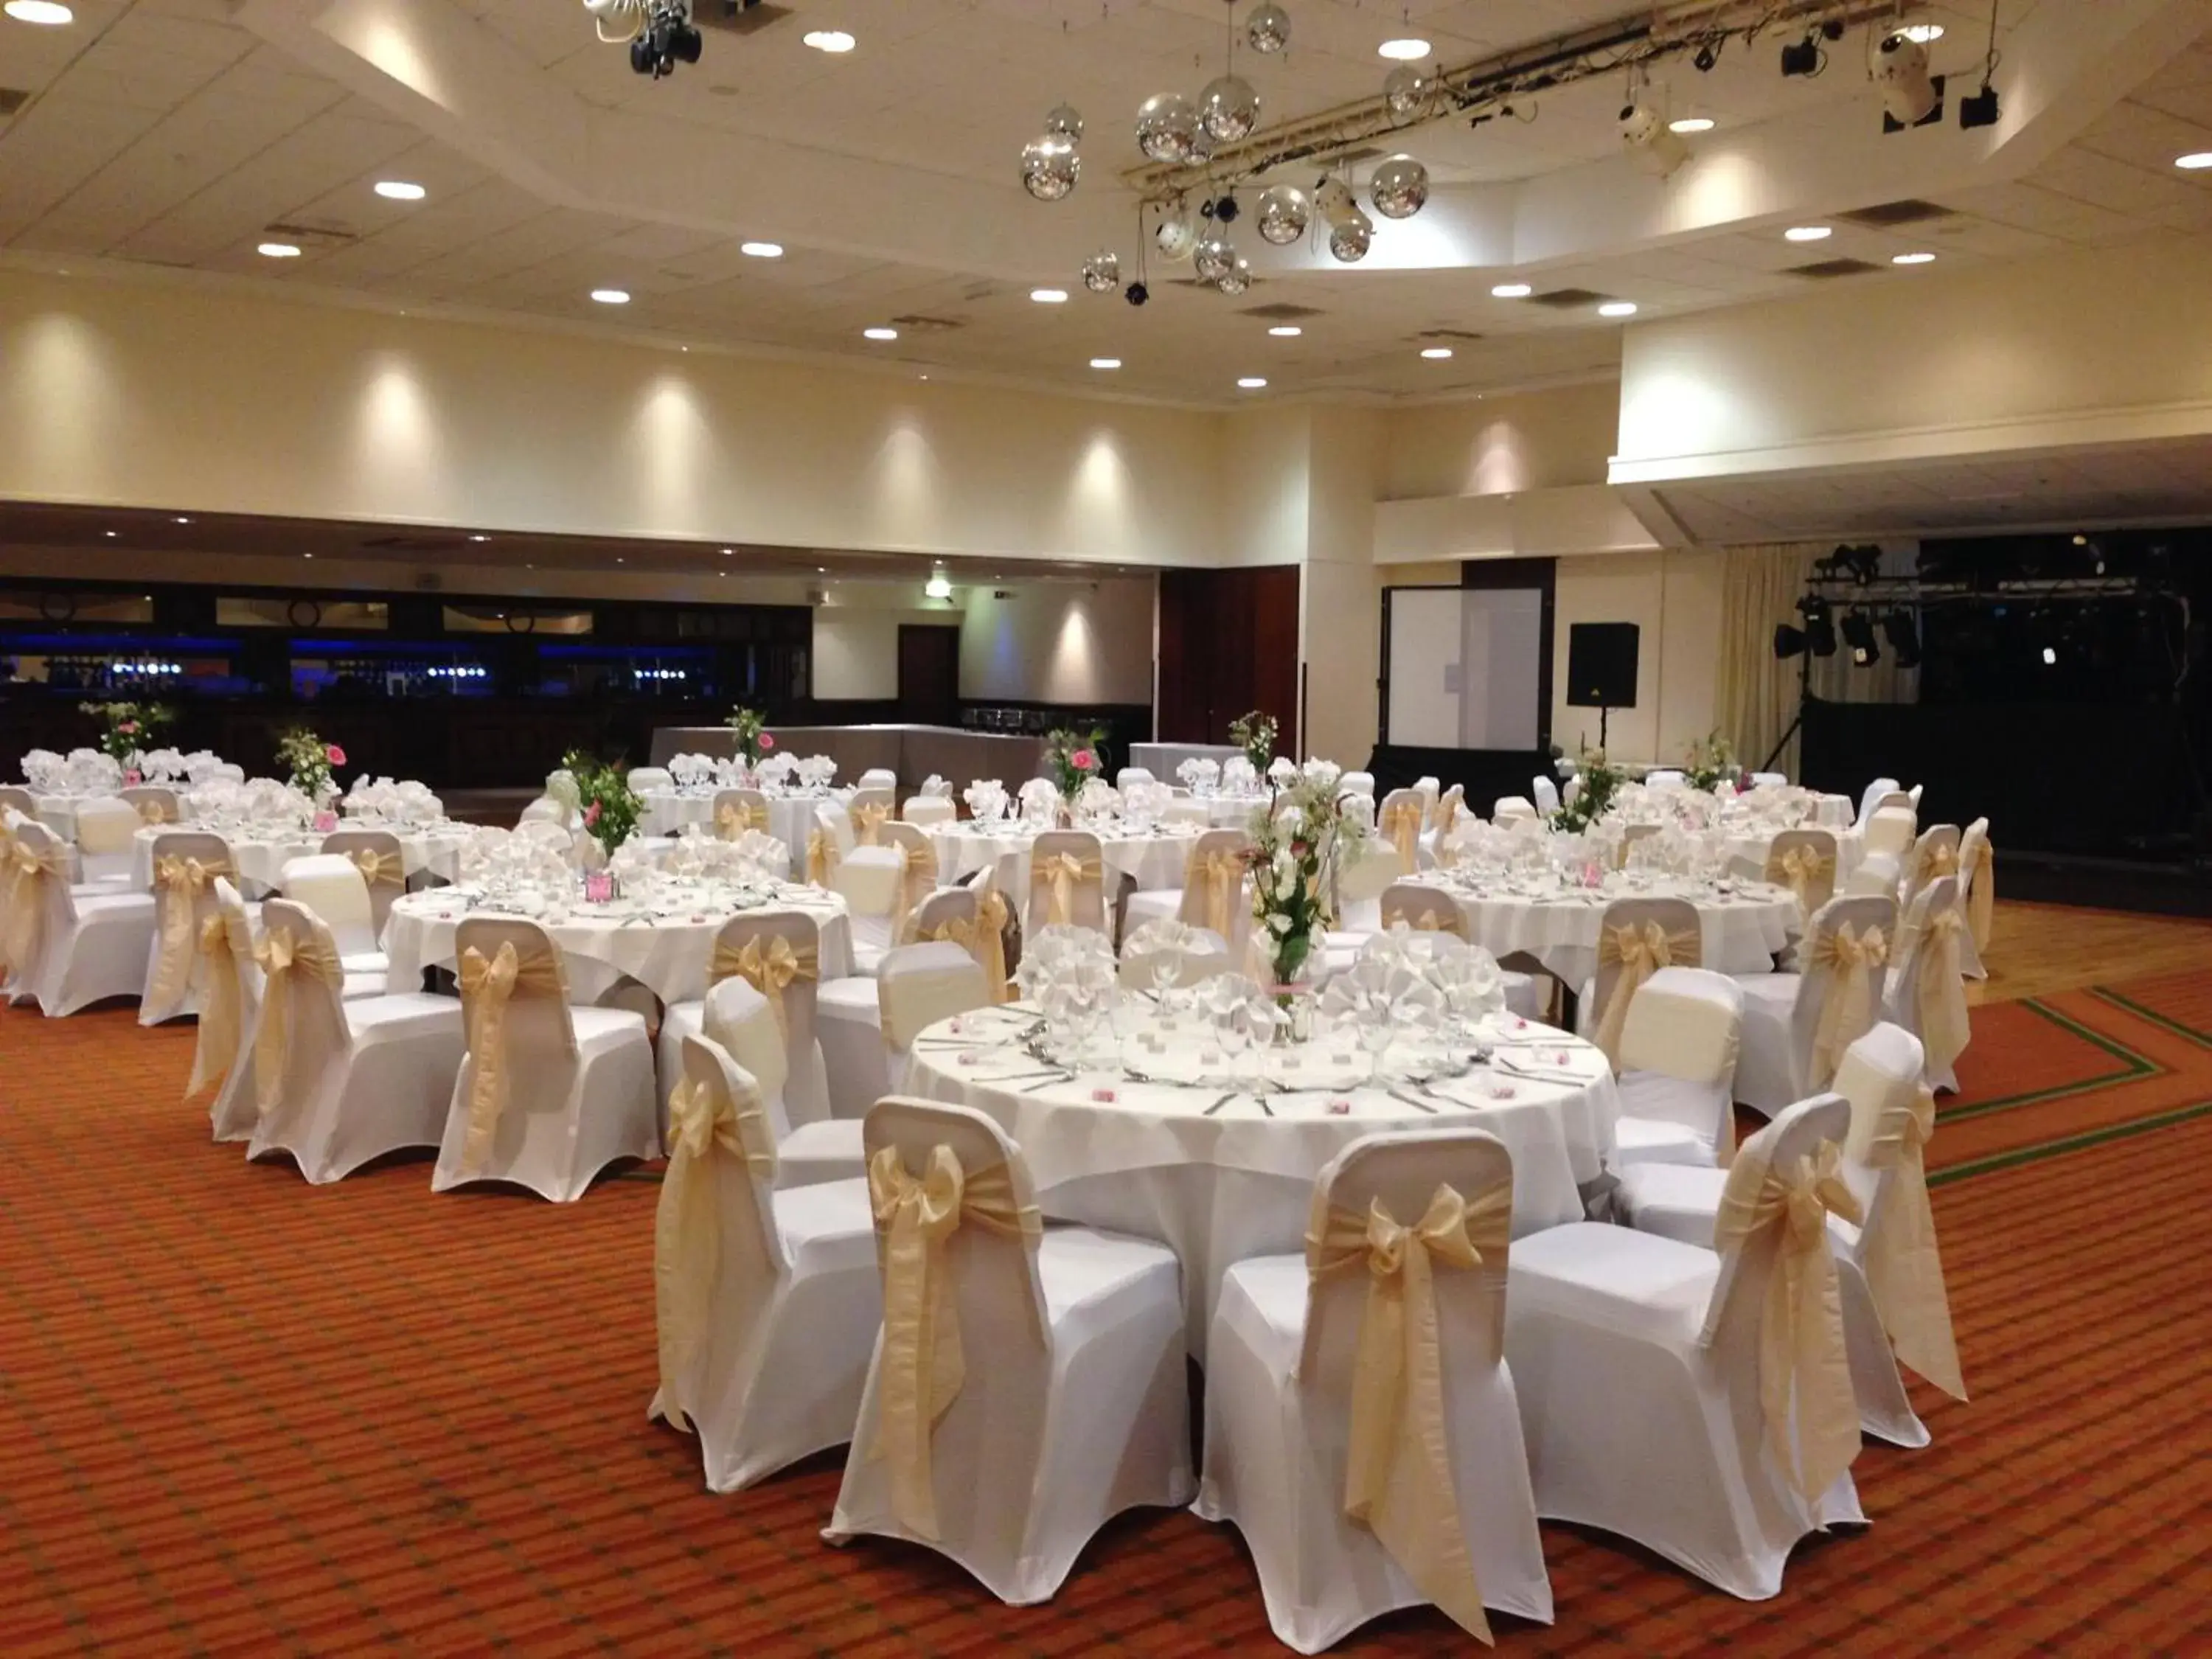 Banquet/Function facilities, Banquet Facilities in Best Western Ipswich Hotel